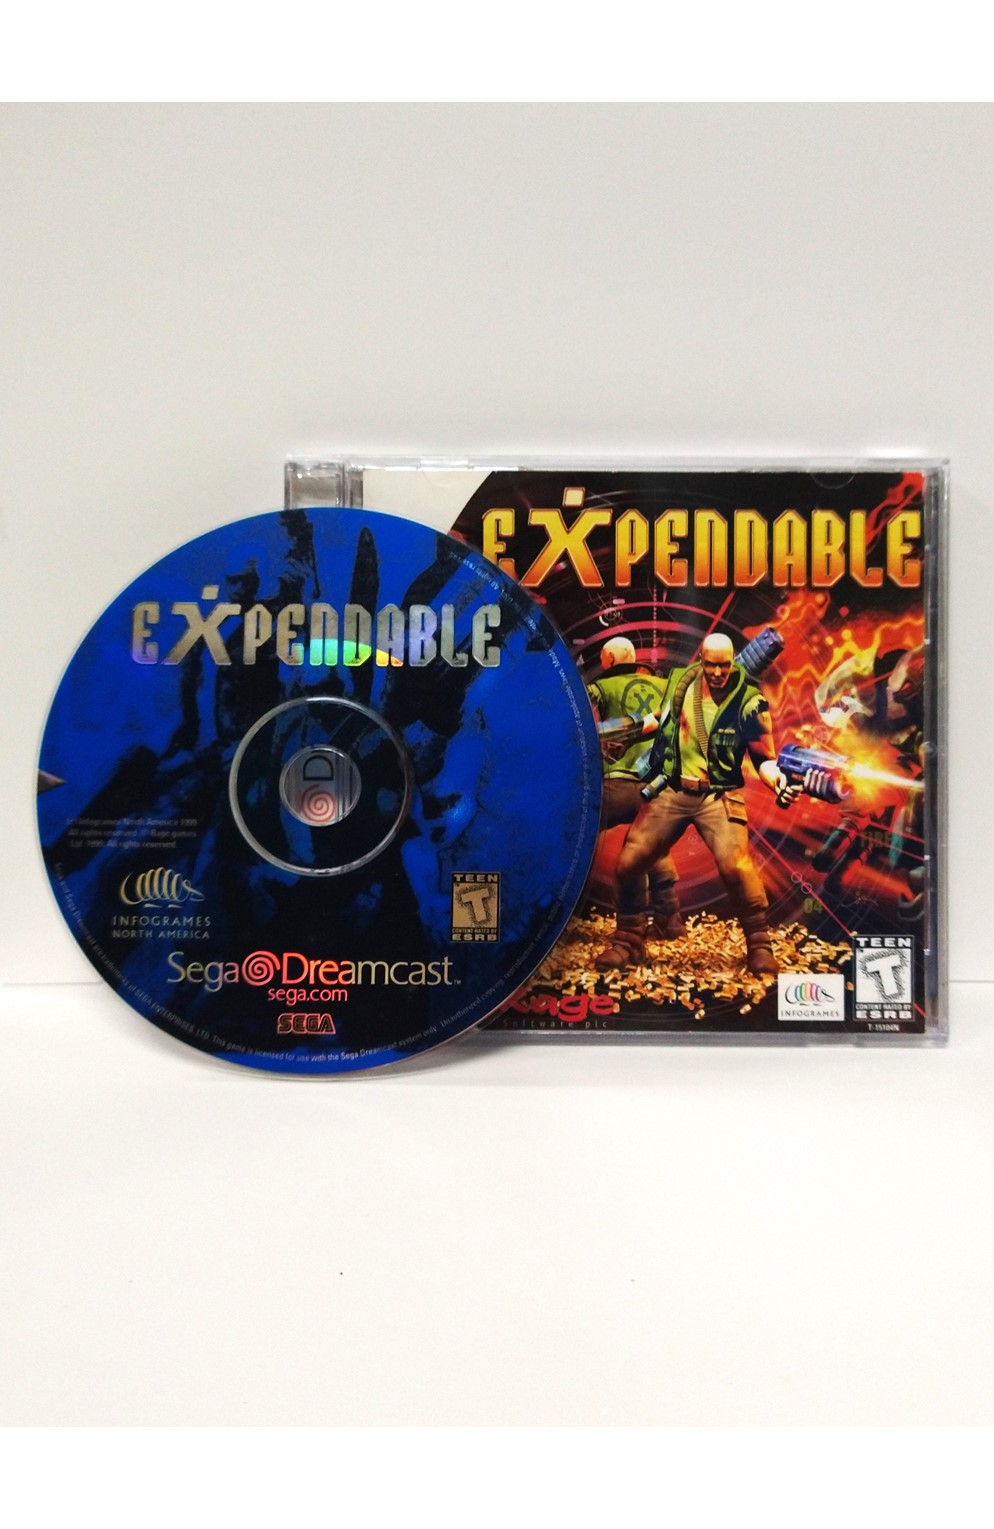 Sega Dreamcast Expendable